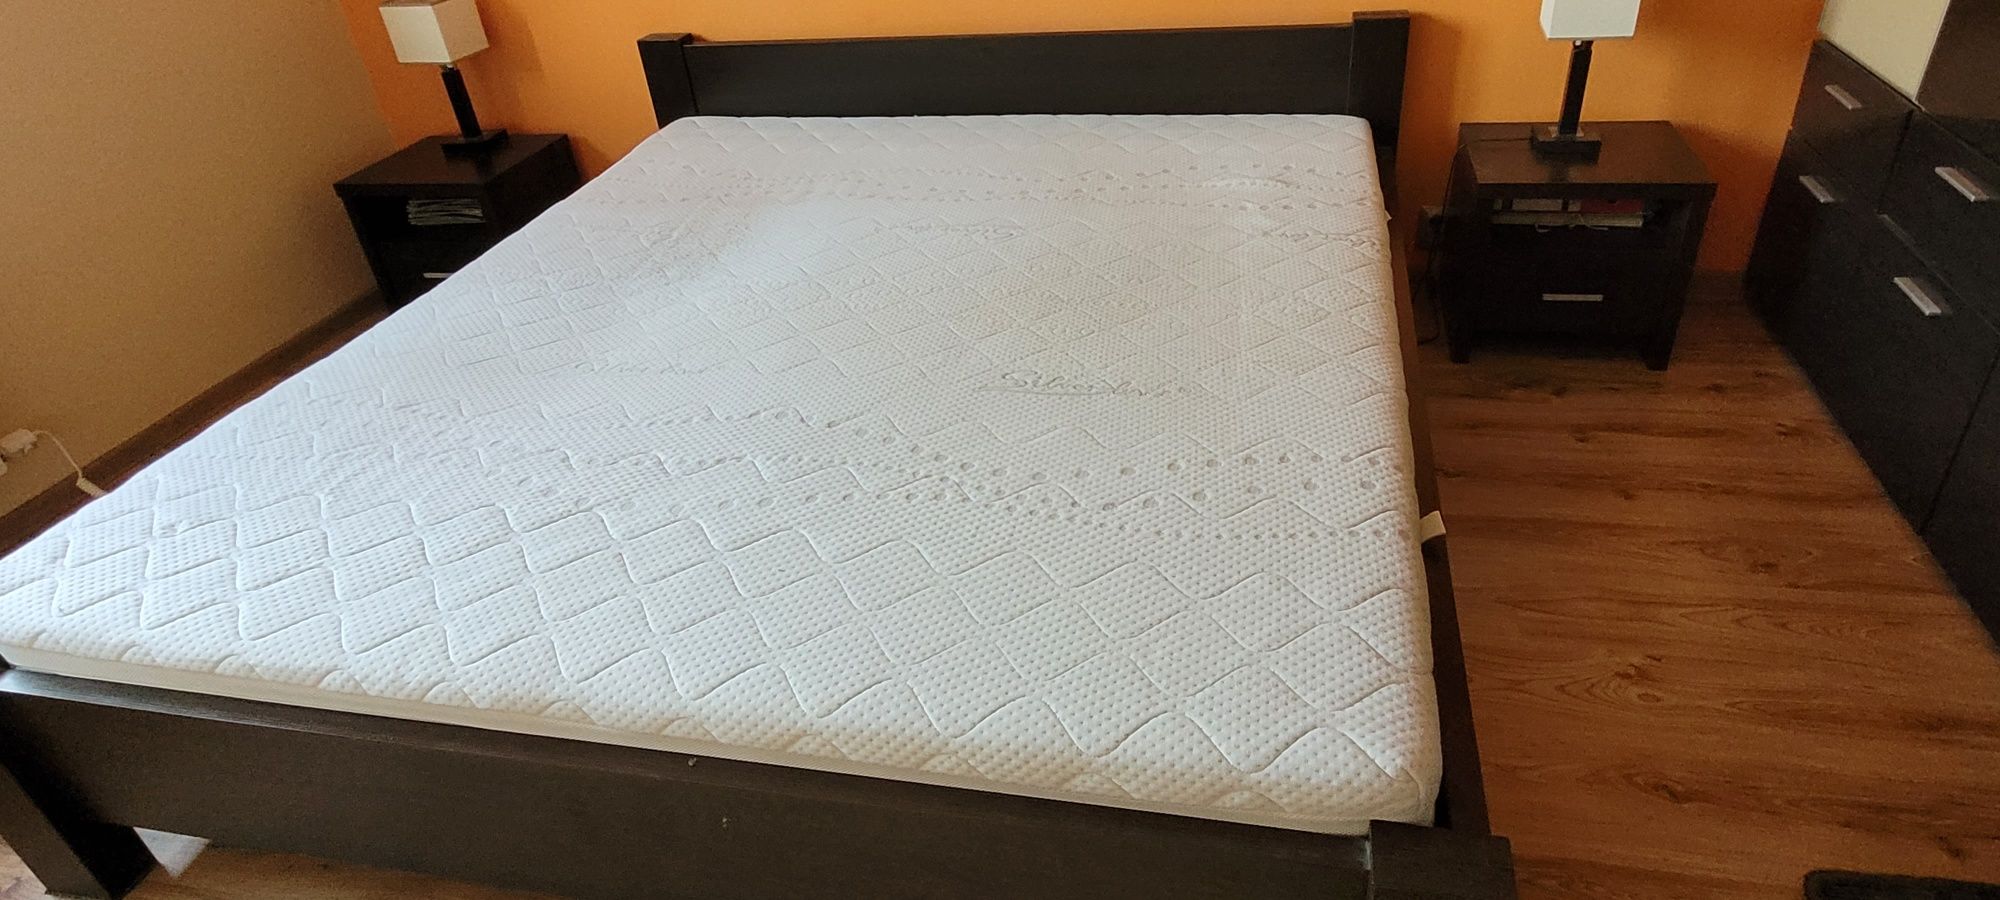 Łóżko z materacem i szafkami nocnymi